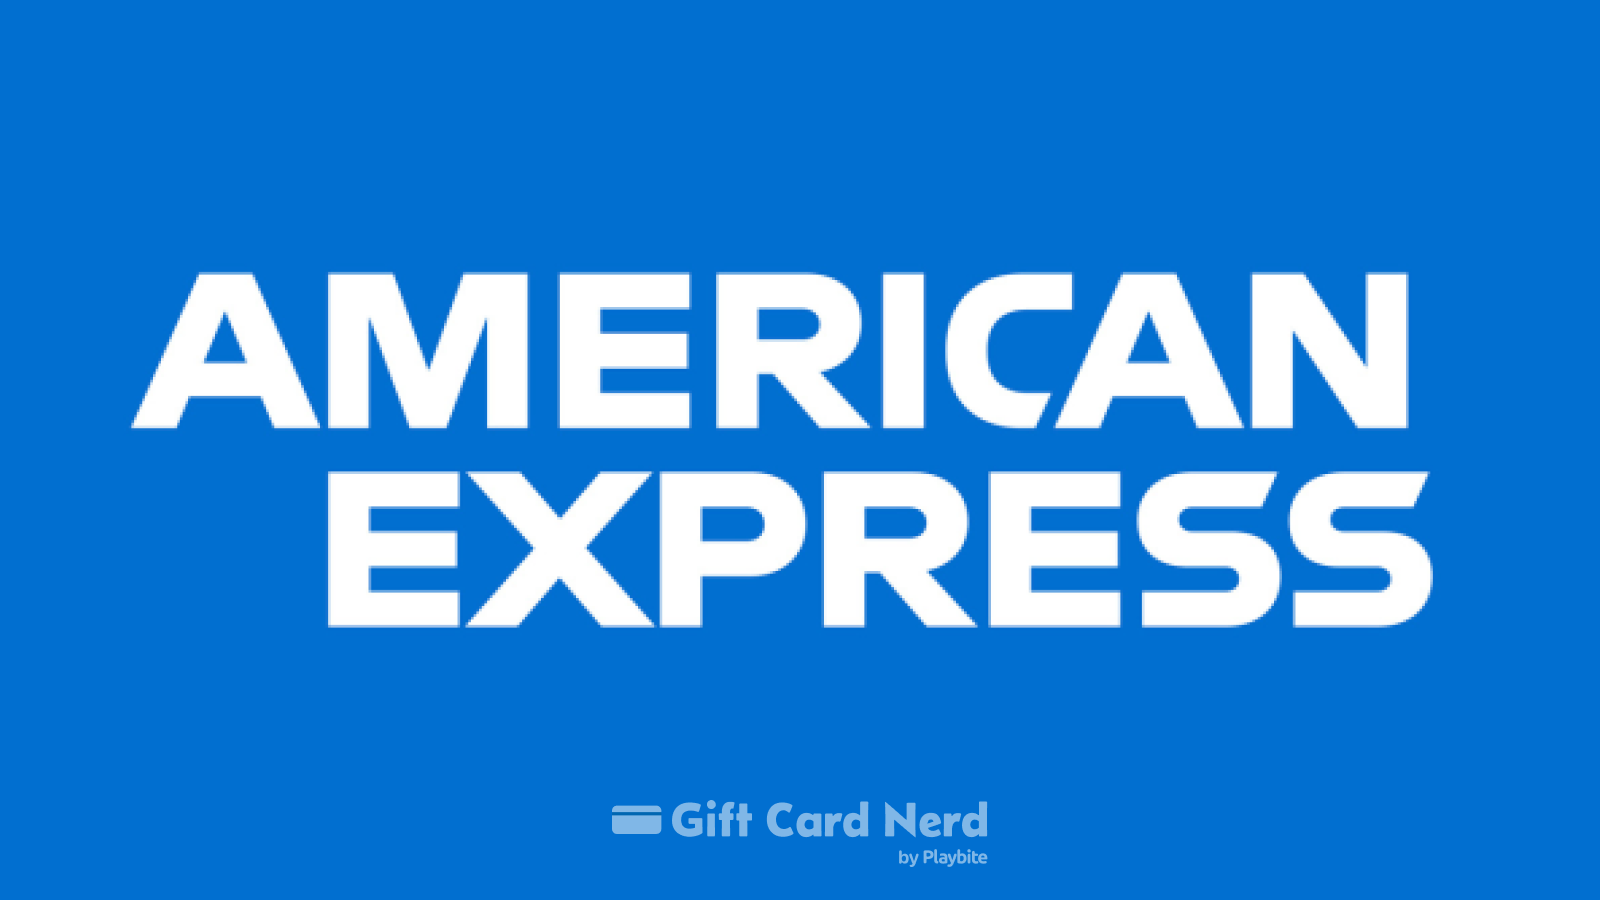 Can I Use an Amex Gift Card on Grubhub?